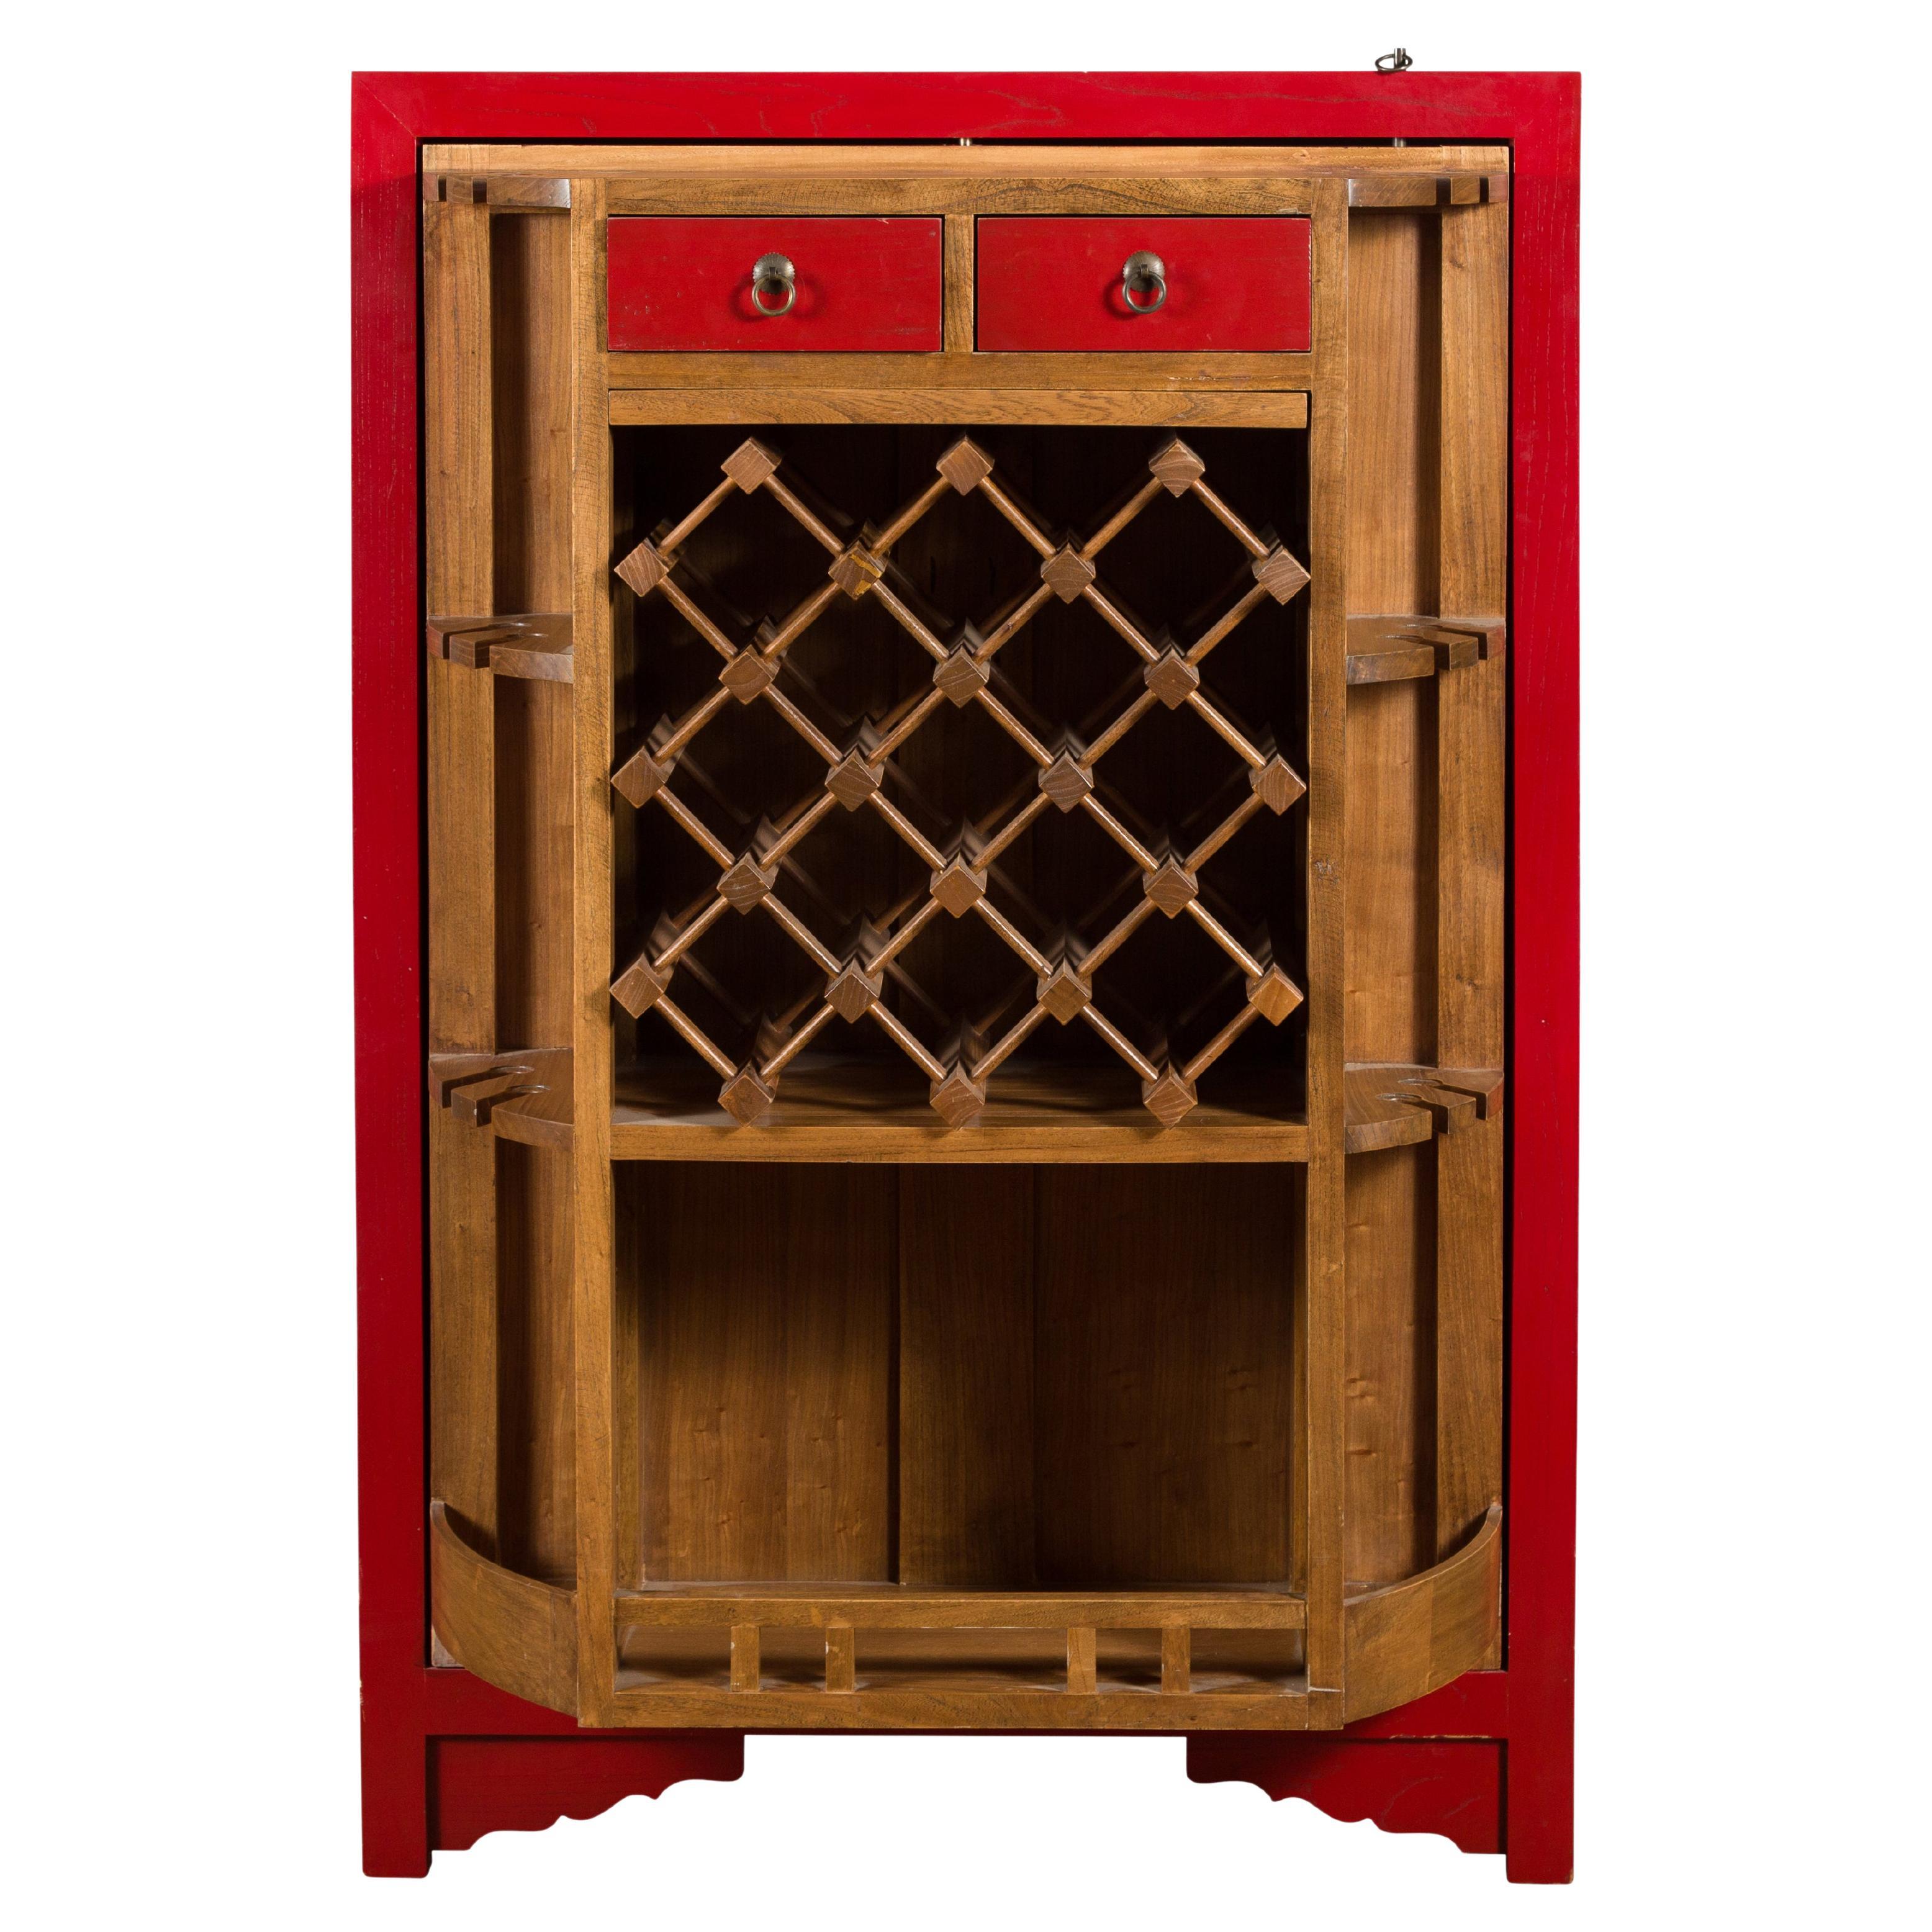 Chinesischer Antik-Stil rot lackiert Liquor Cabinet mit drehbaren Hidden Panel